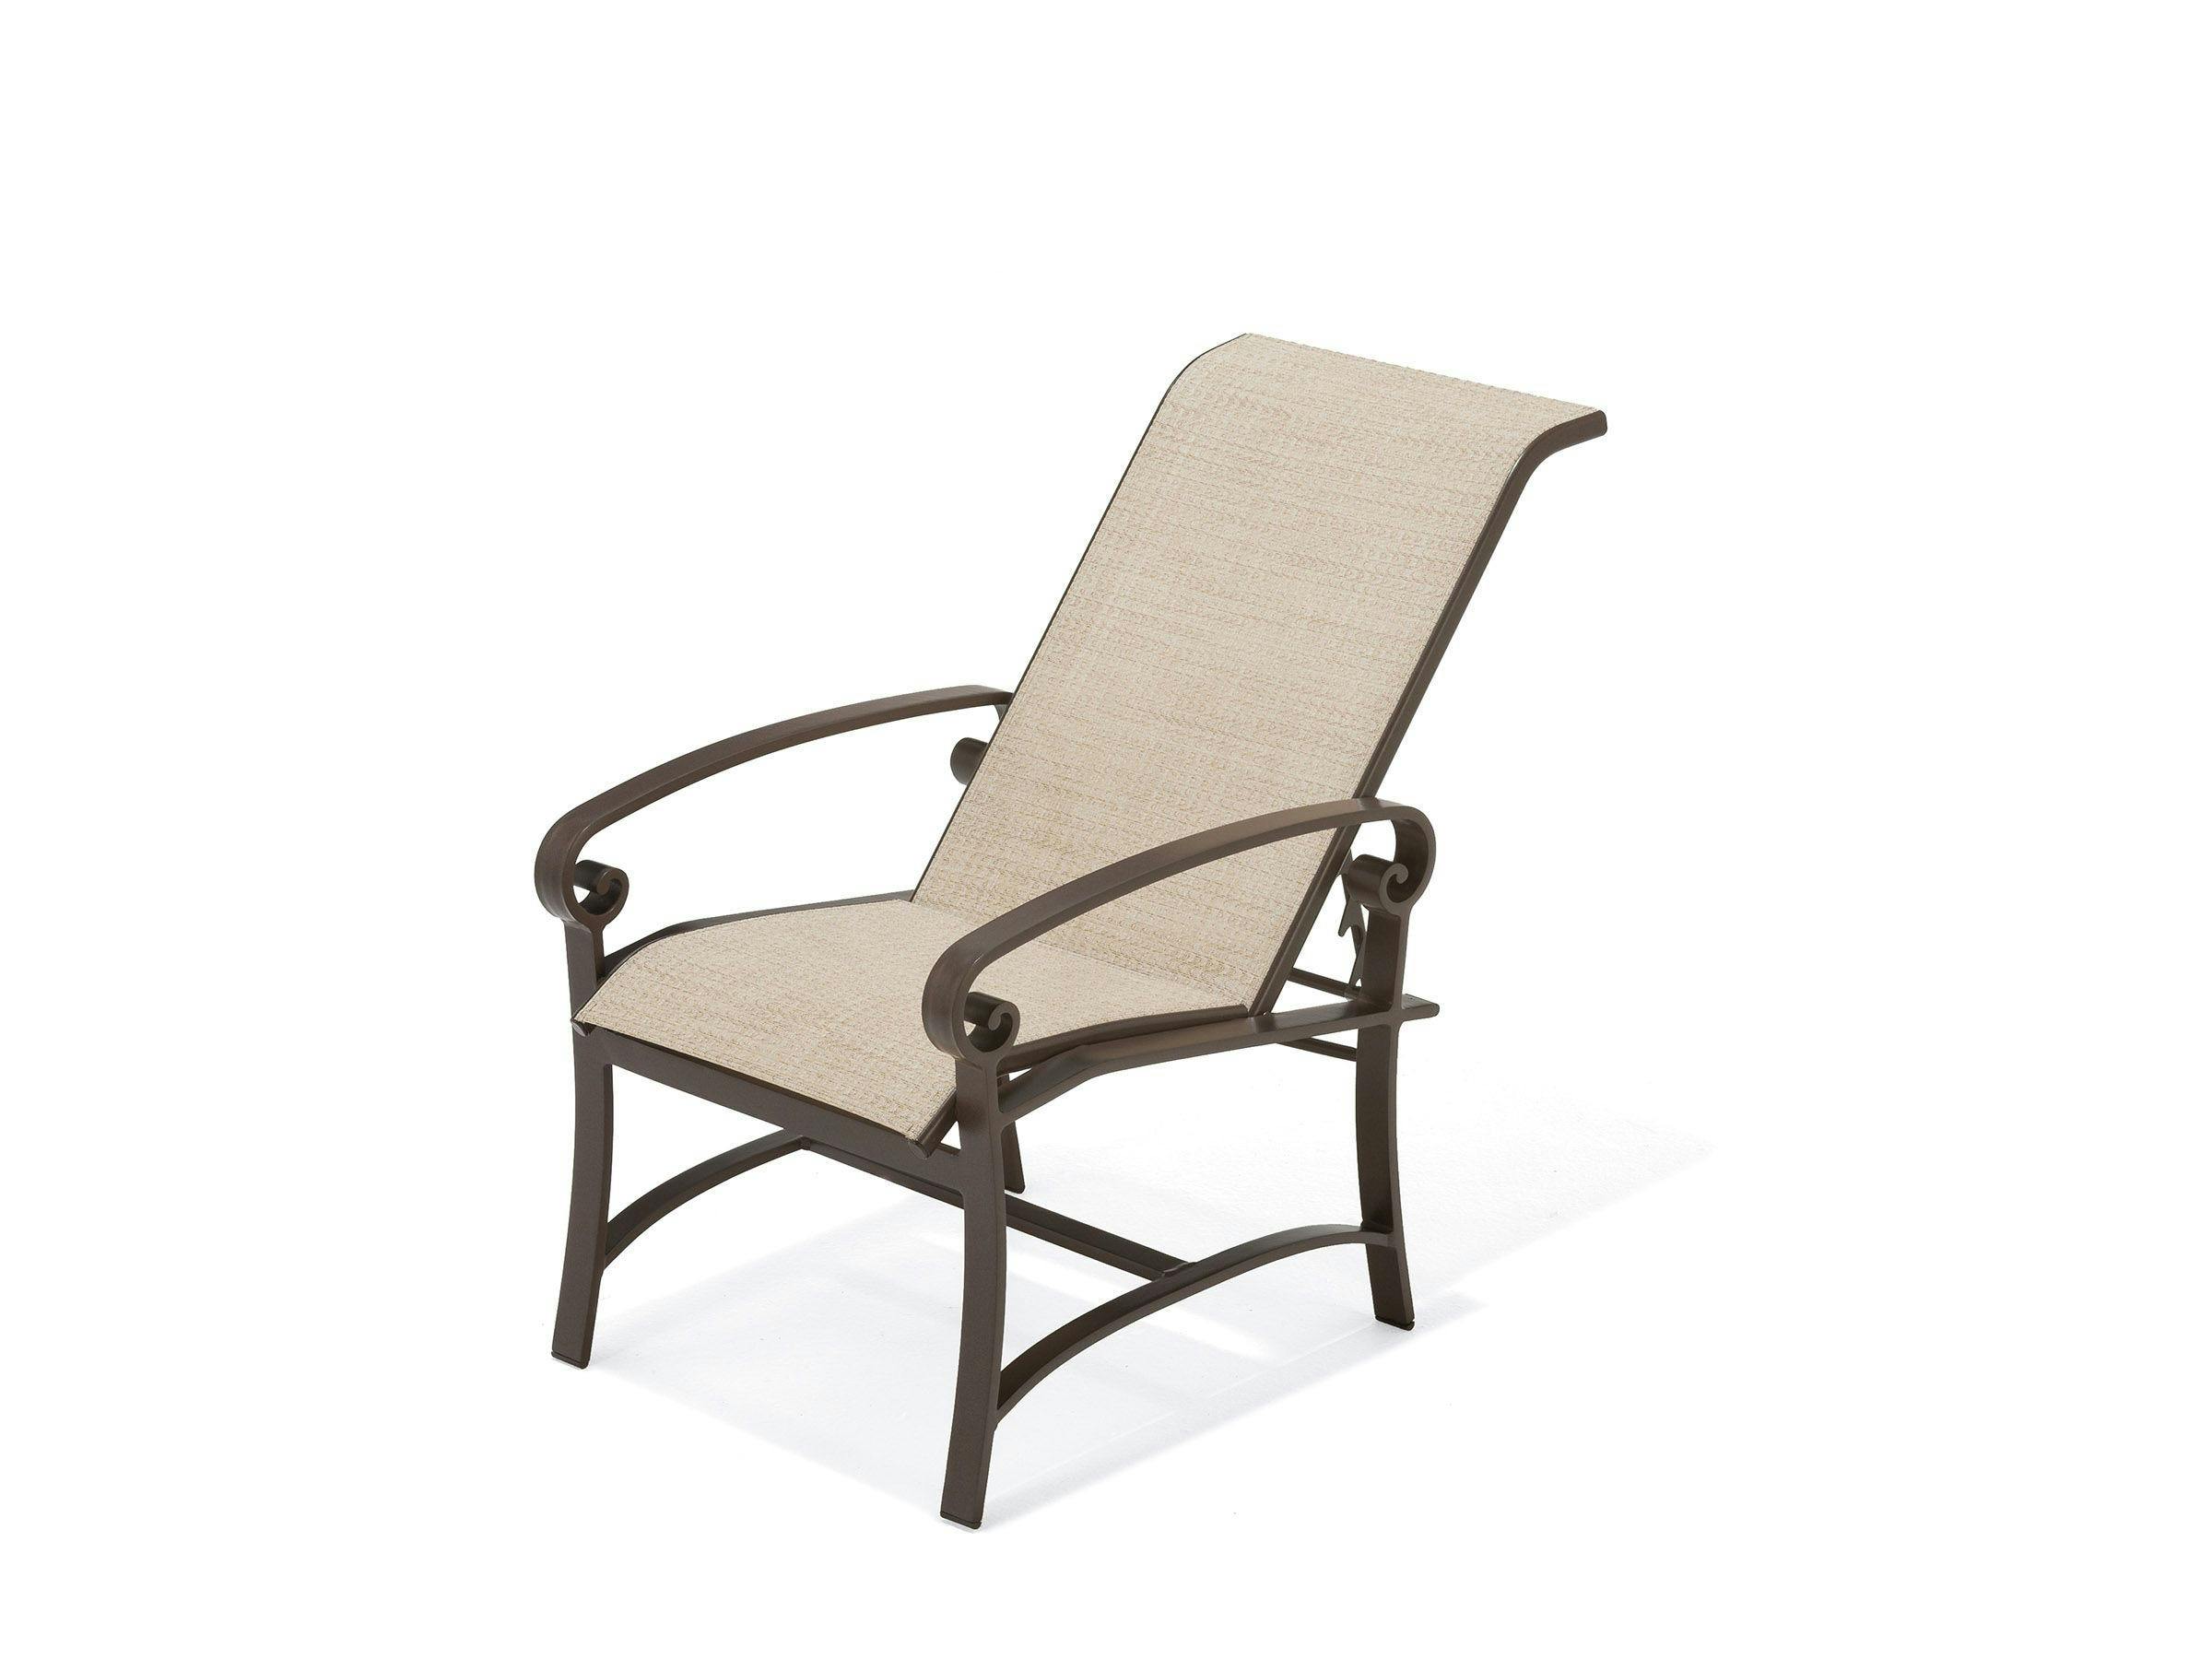 Palazzo Sling Adjustable Chair